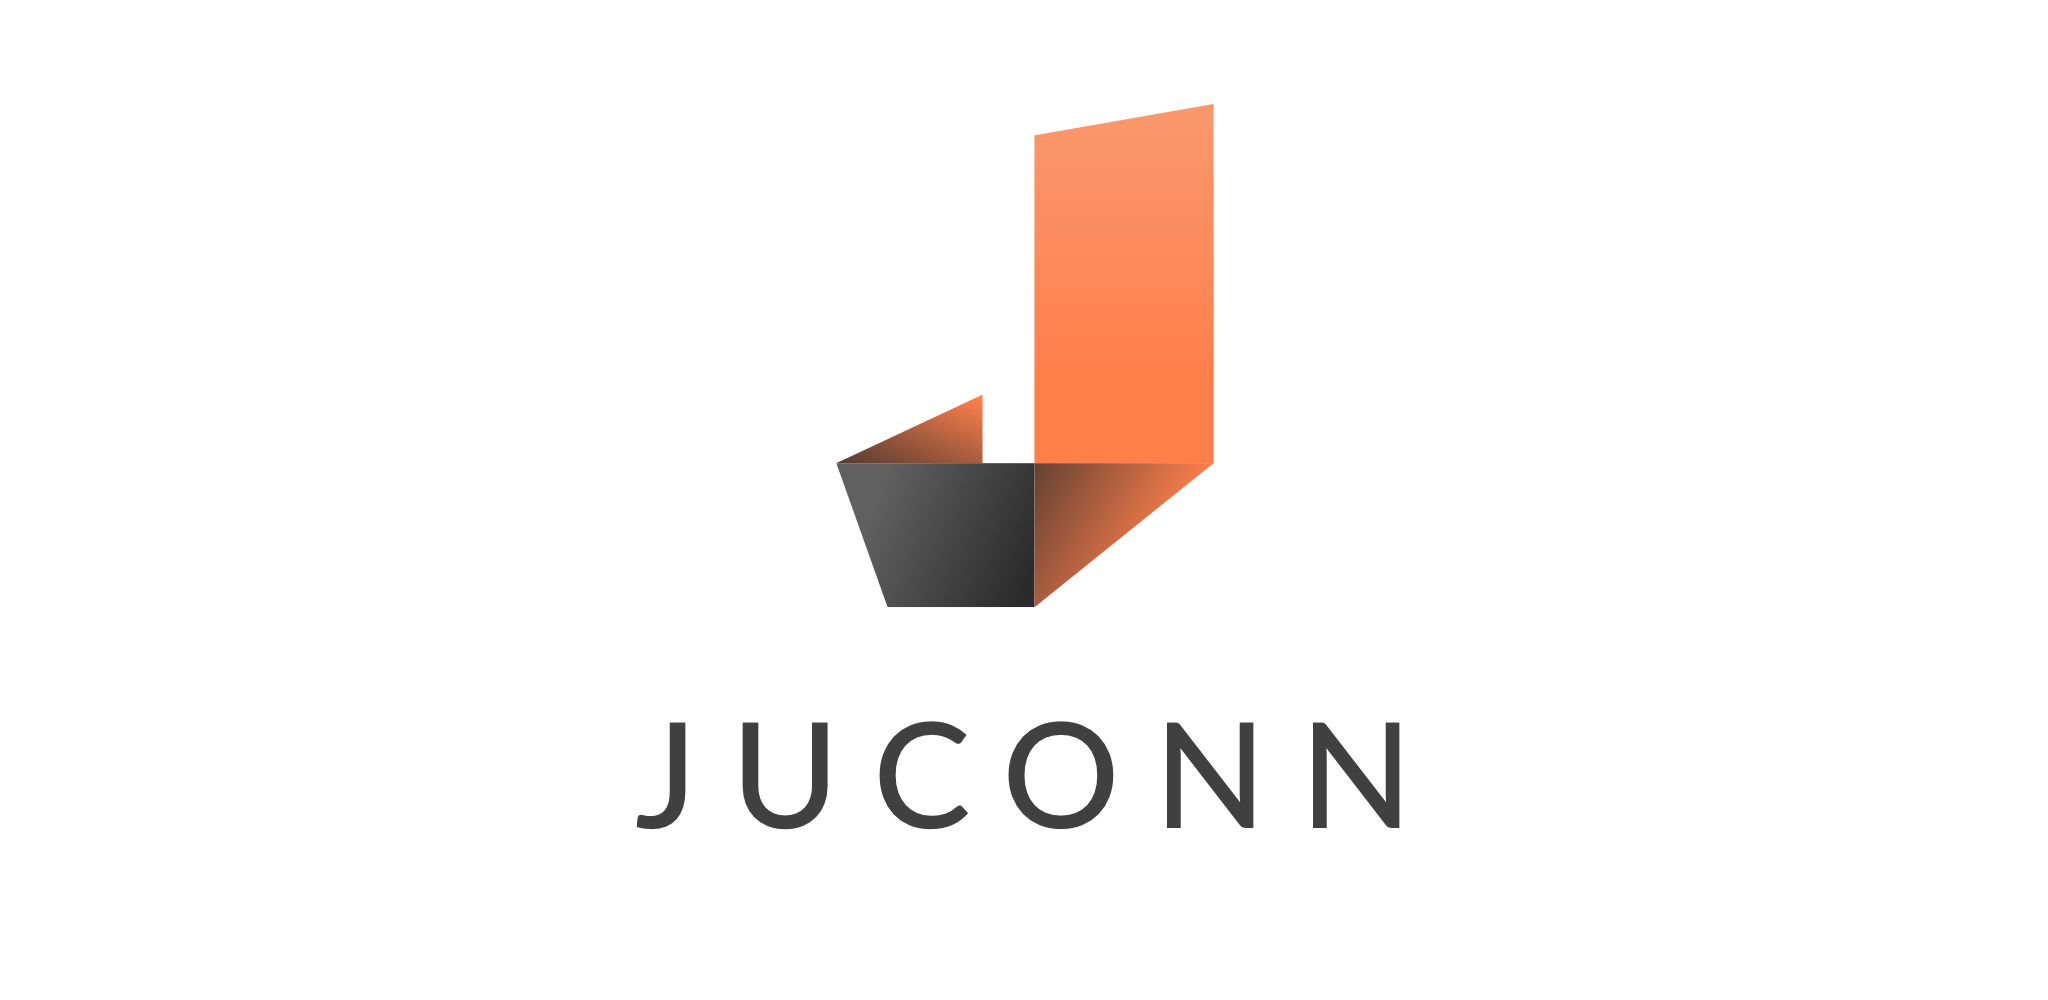 juconn logo